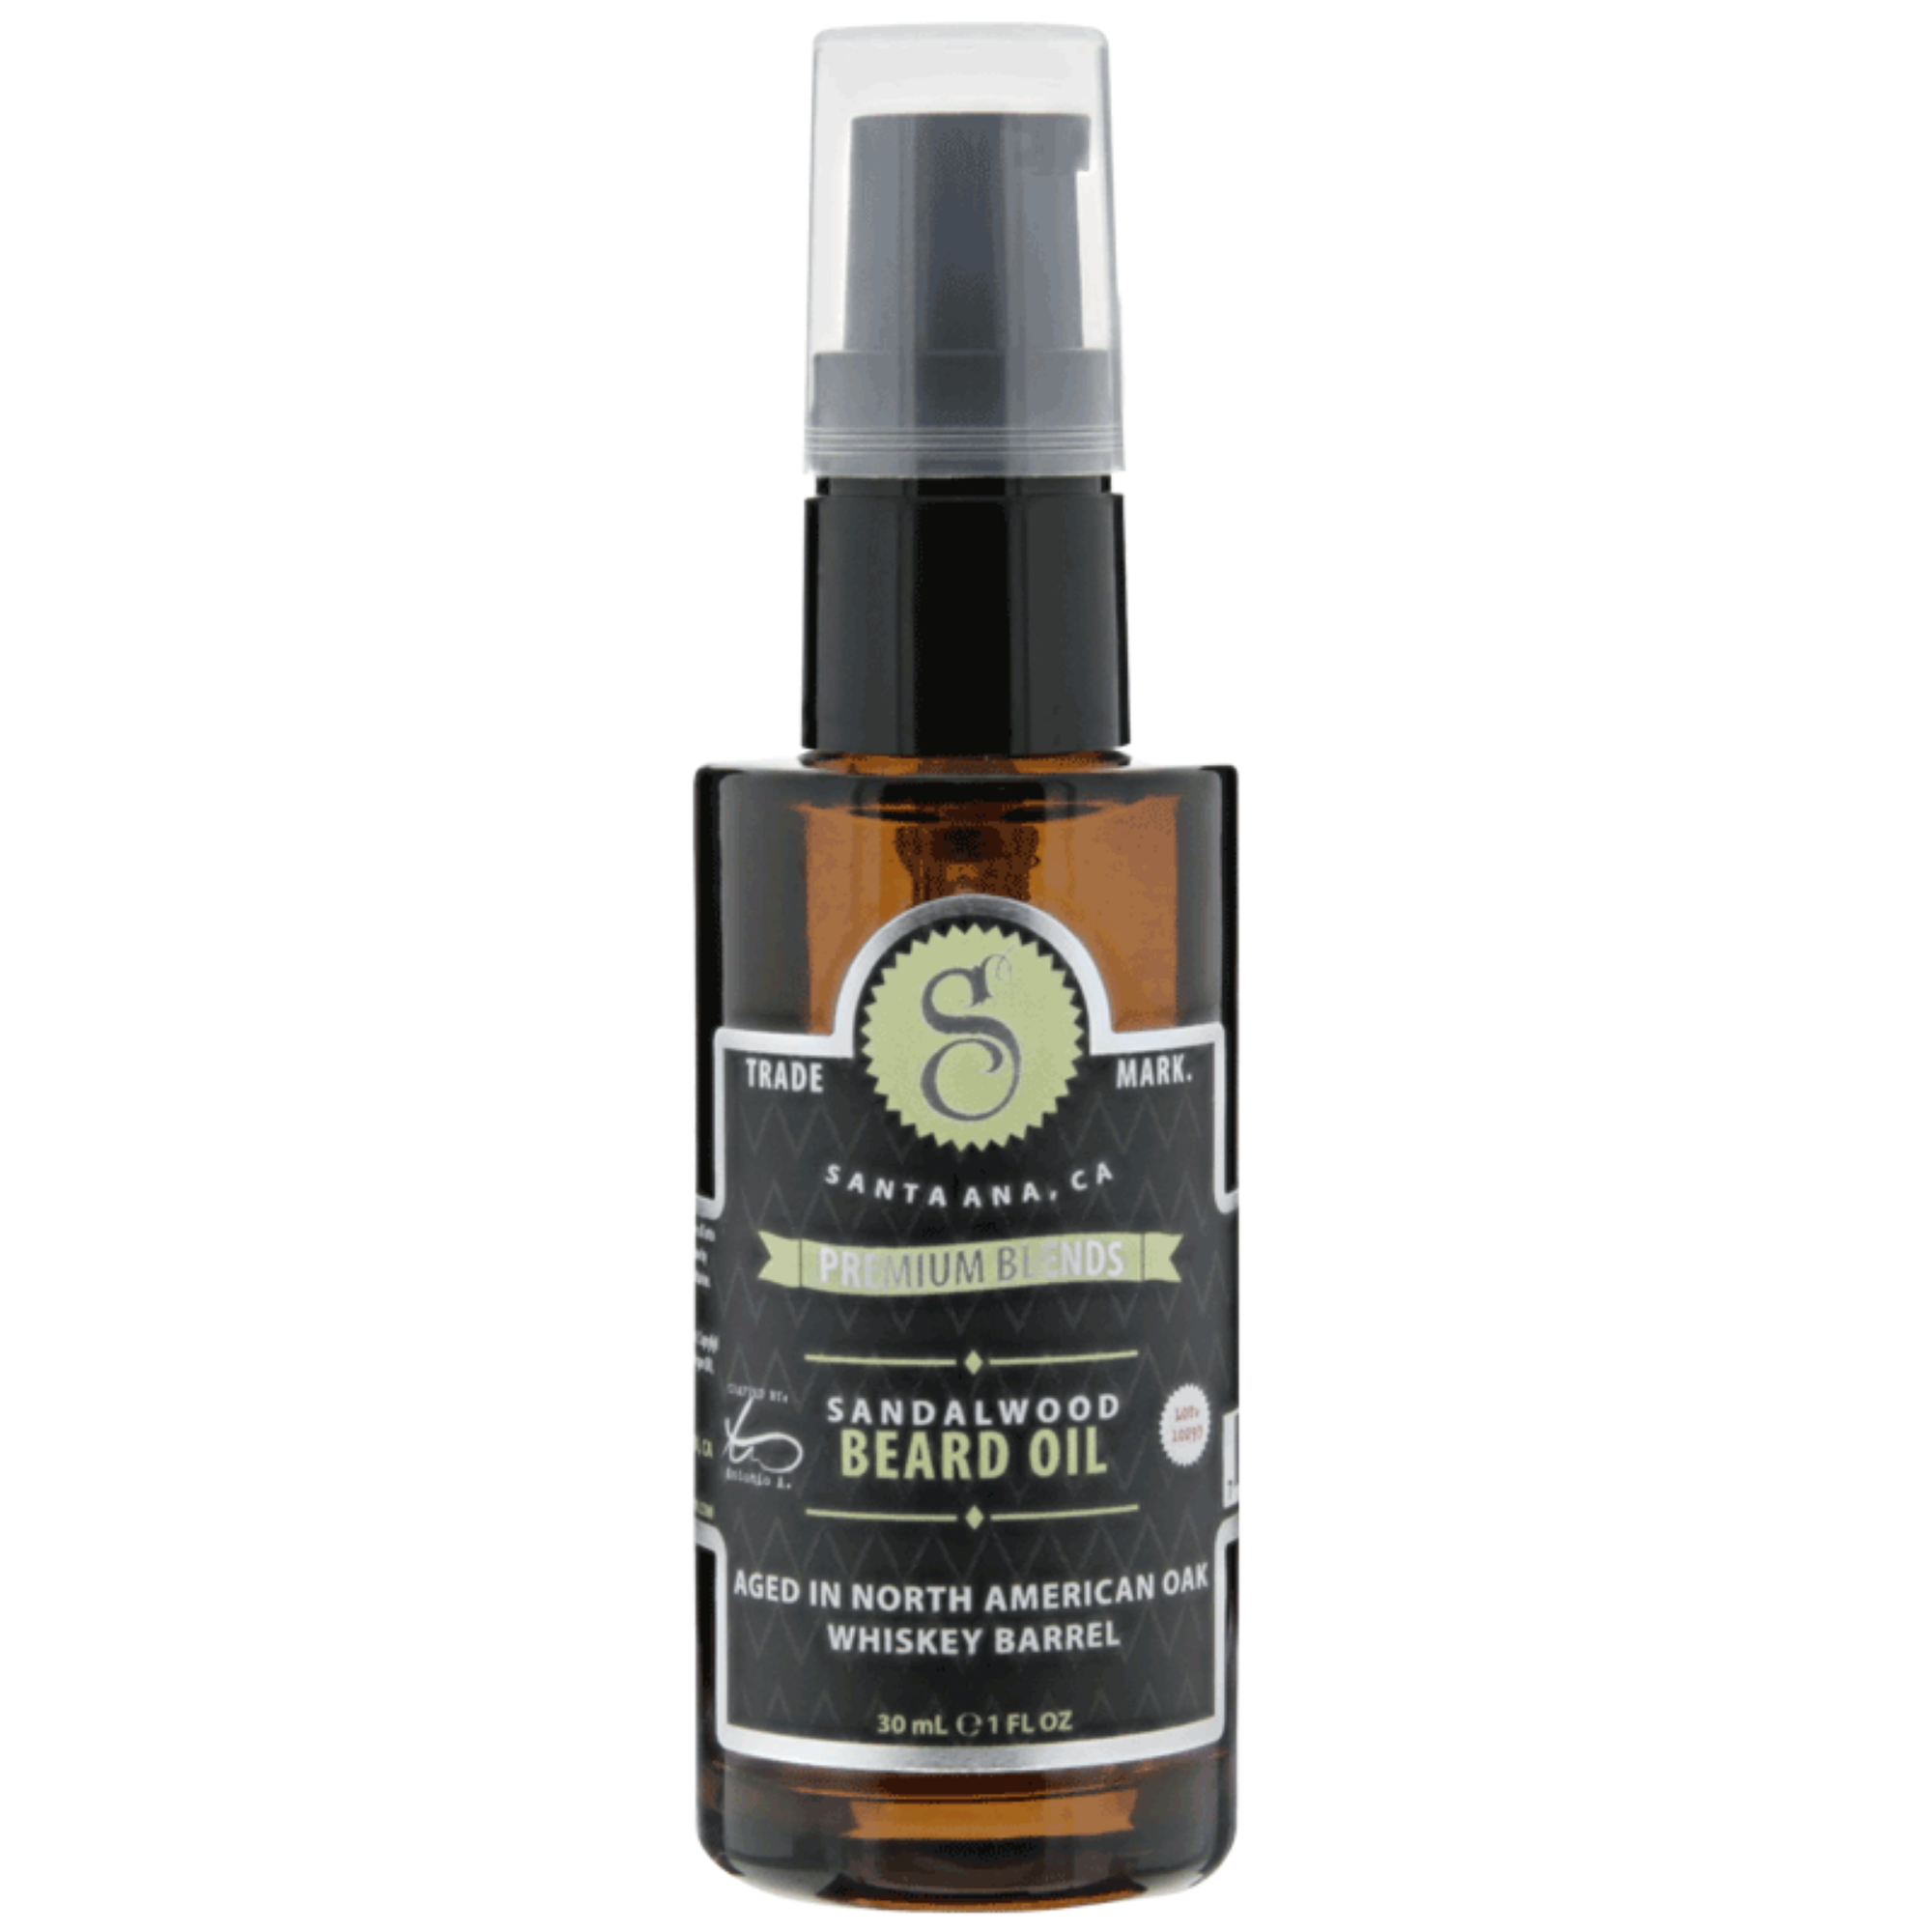 Suavecito Premium Blends Sandalwood Beard Oil